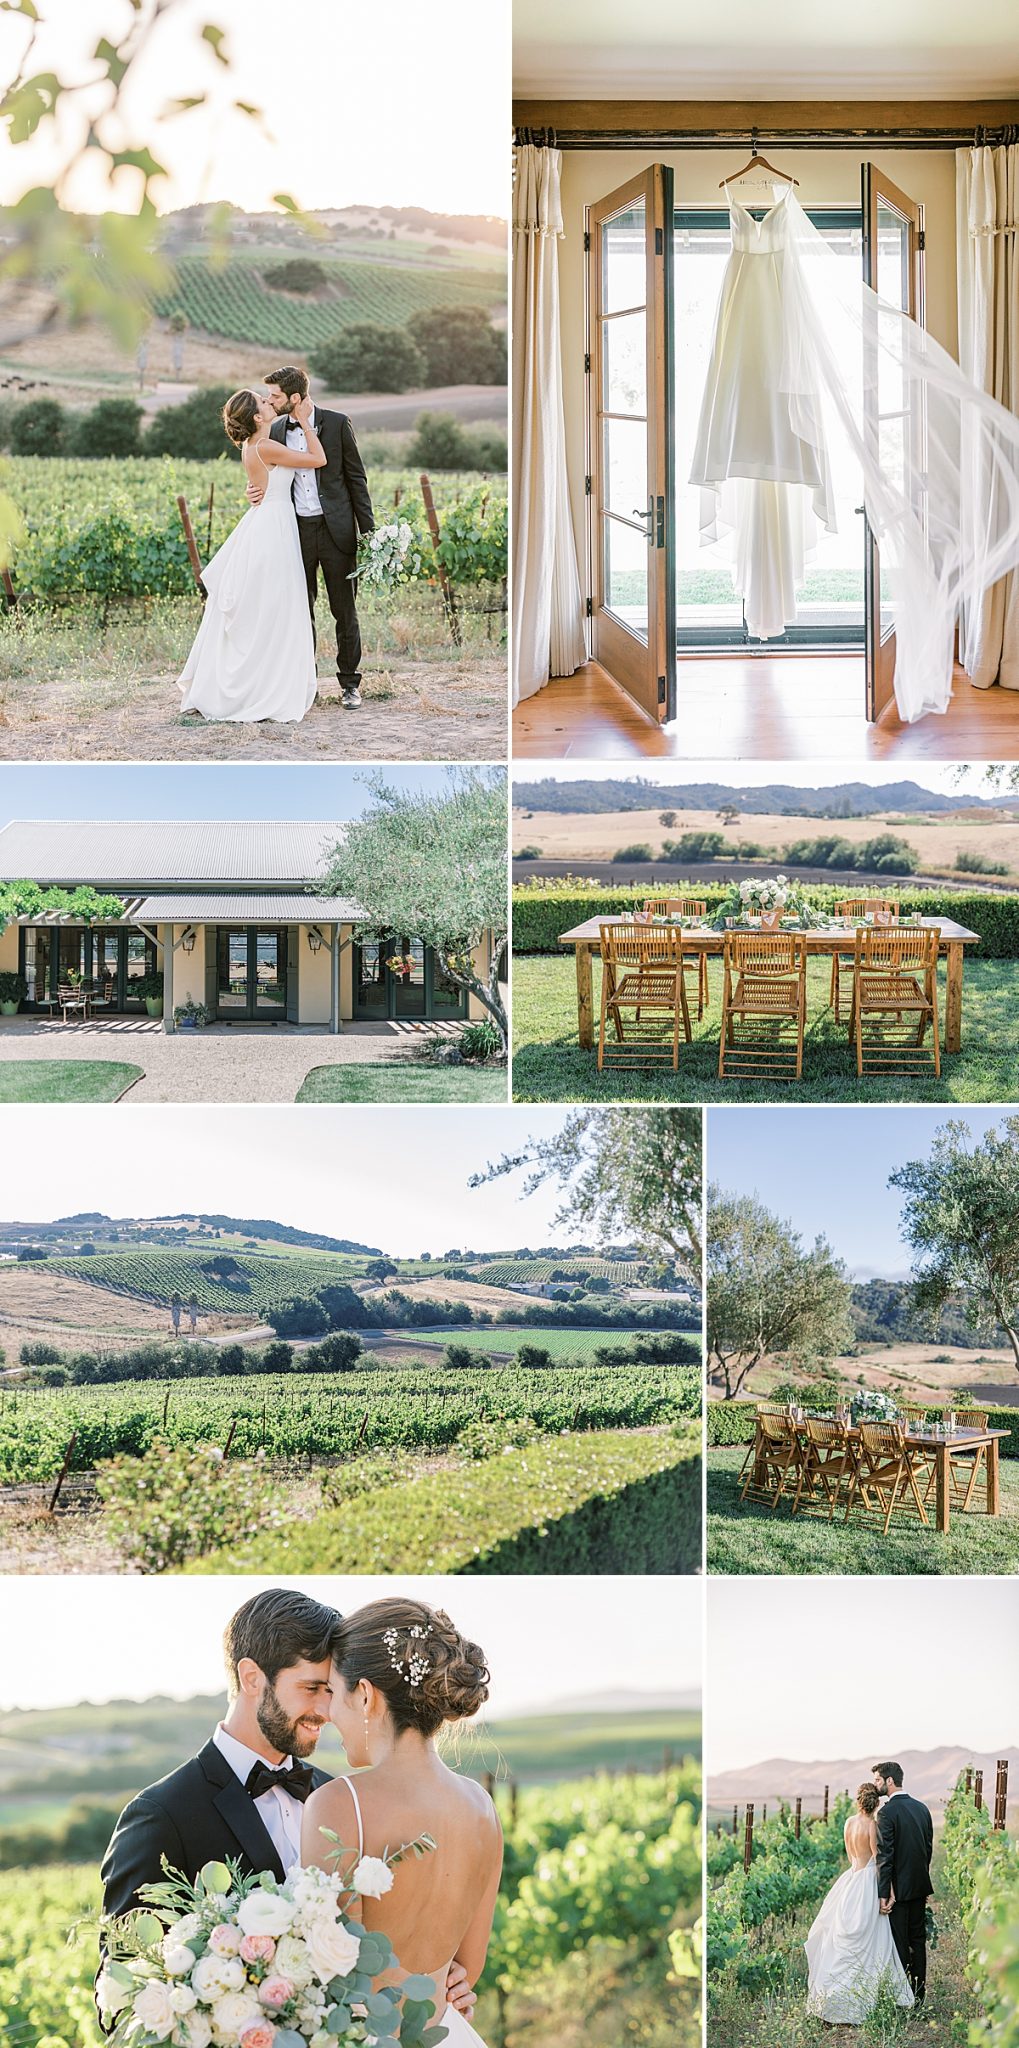 Chene Vineyards is one of many Garden Wedding Venues in Santa Barbara, California. 